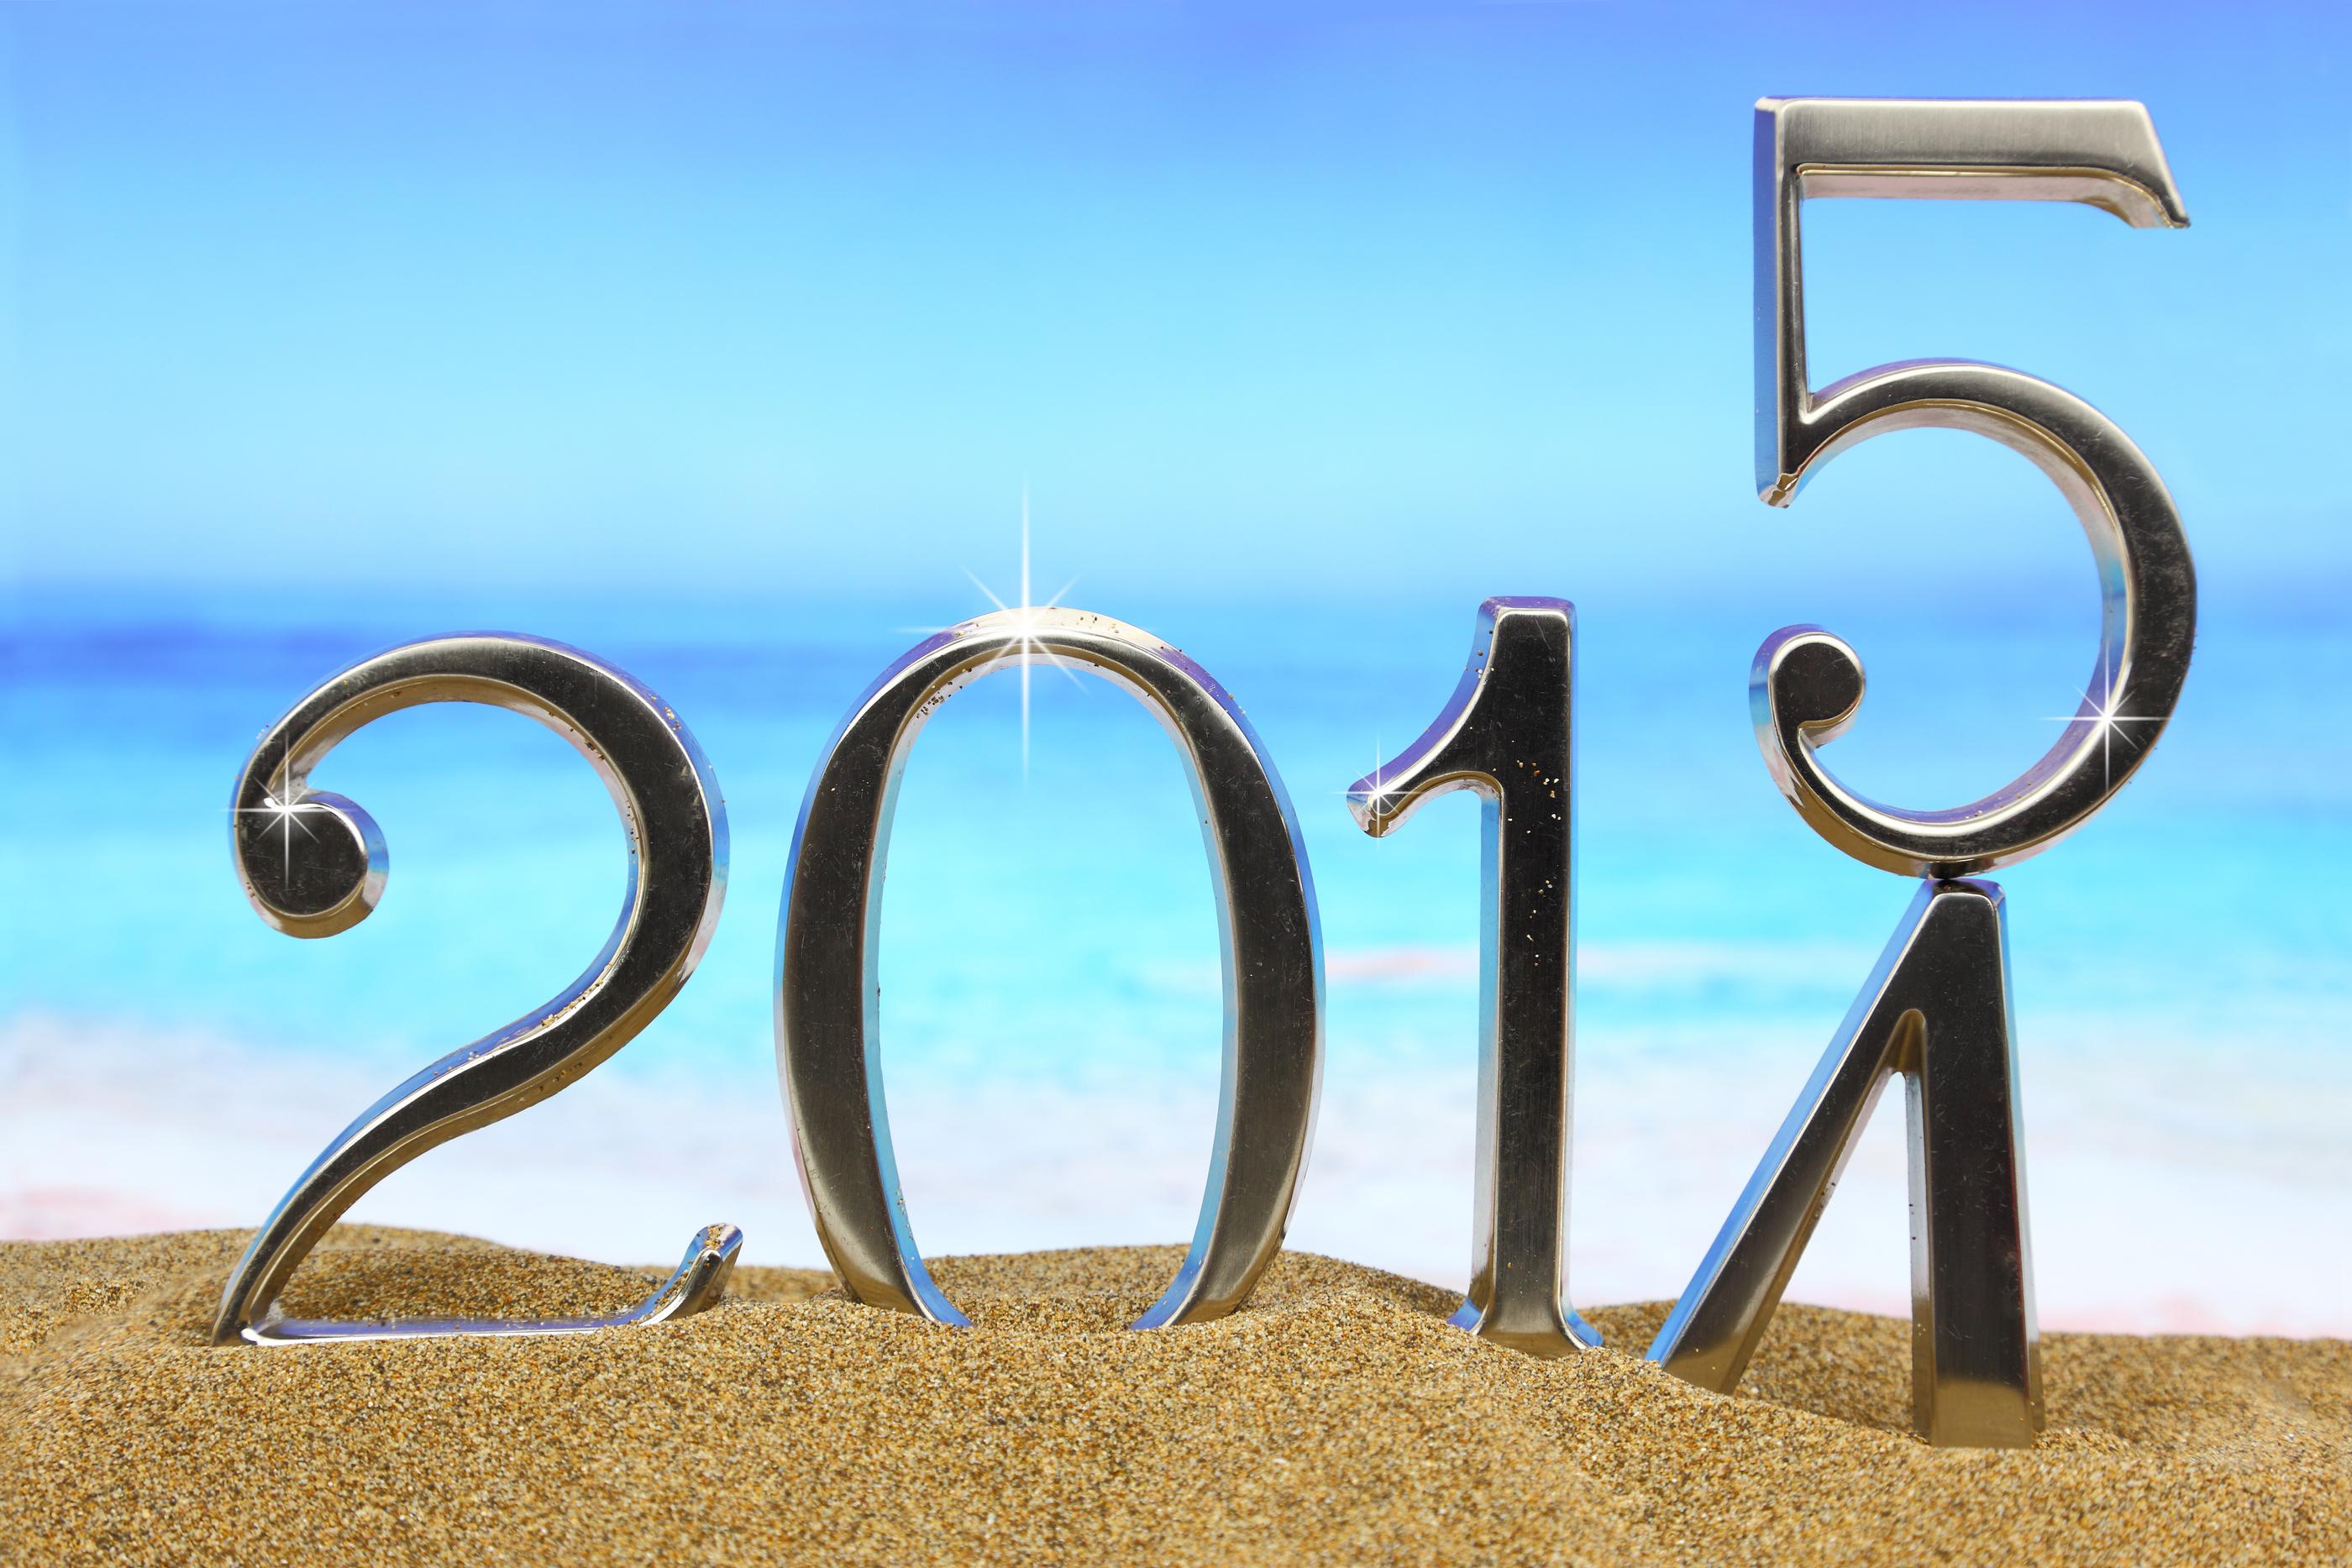 New year 2015 is coming on the beach - Danna Yahav.